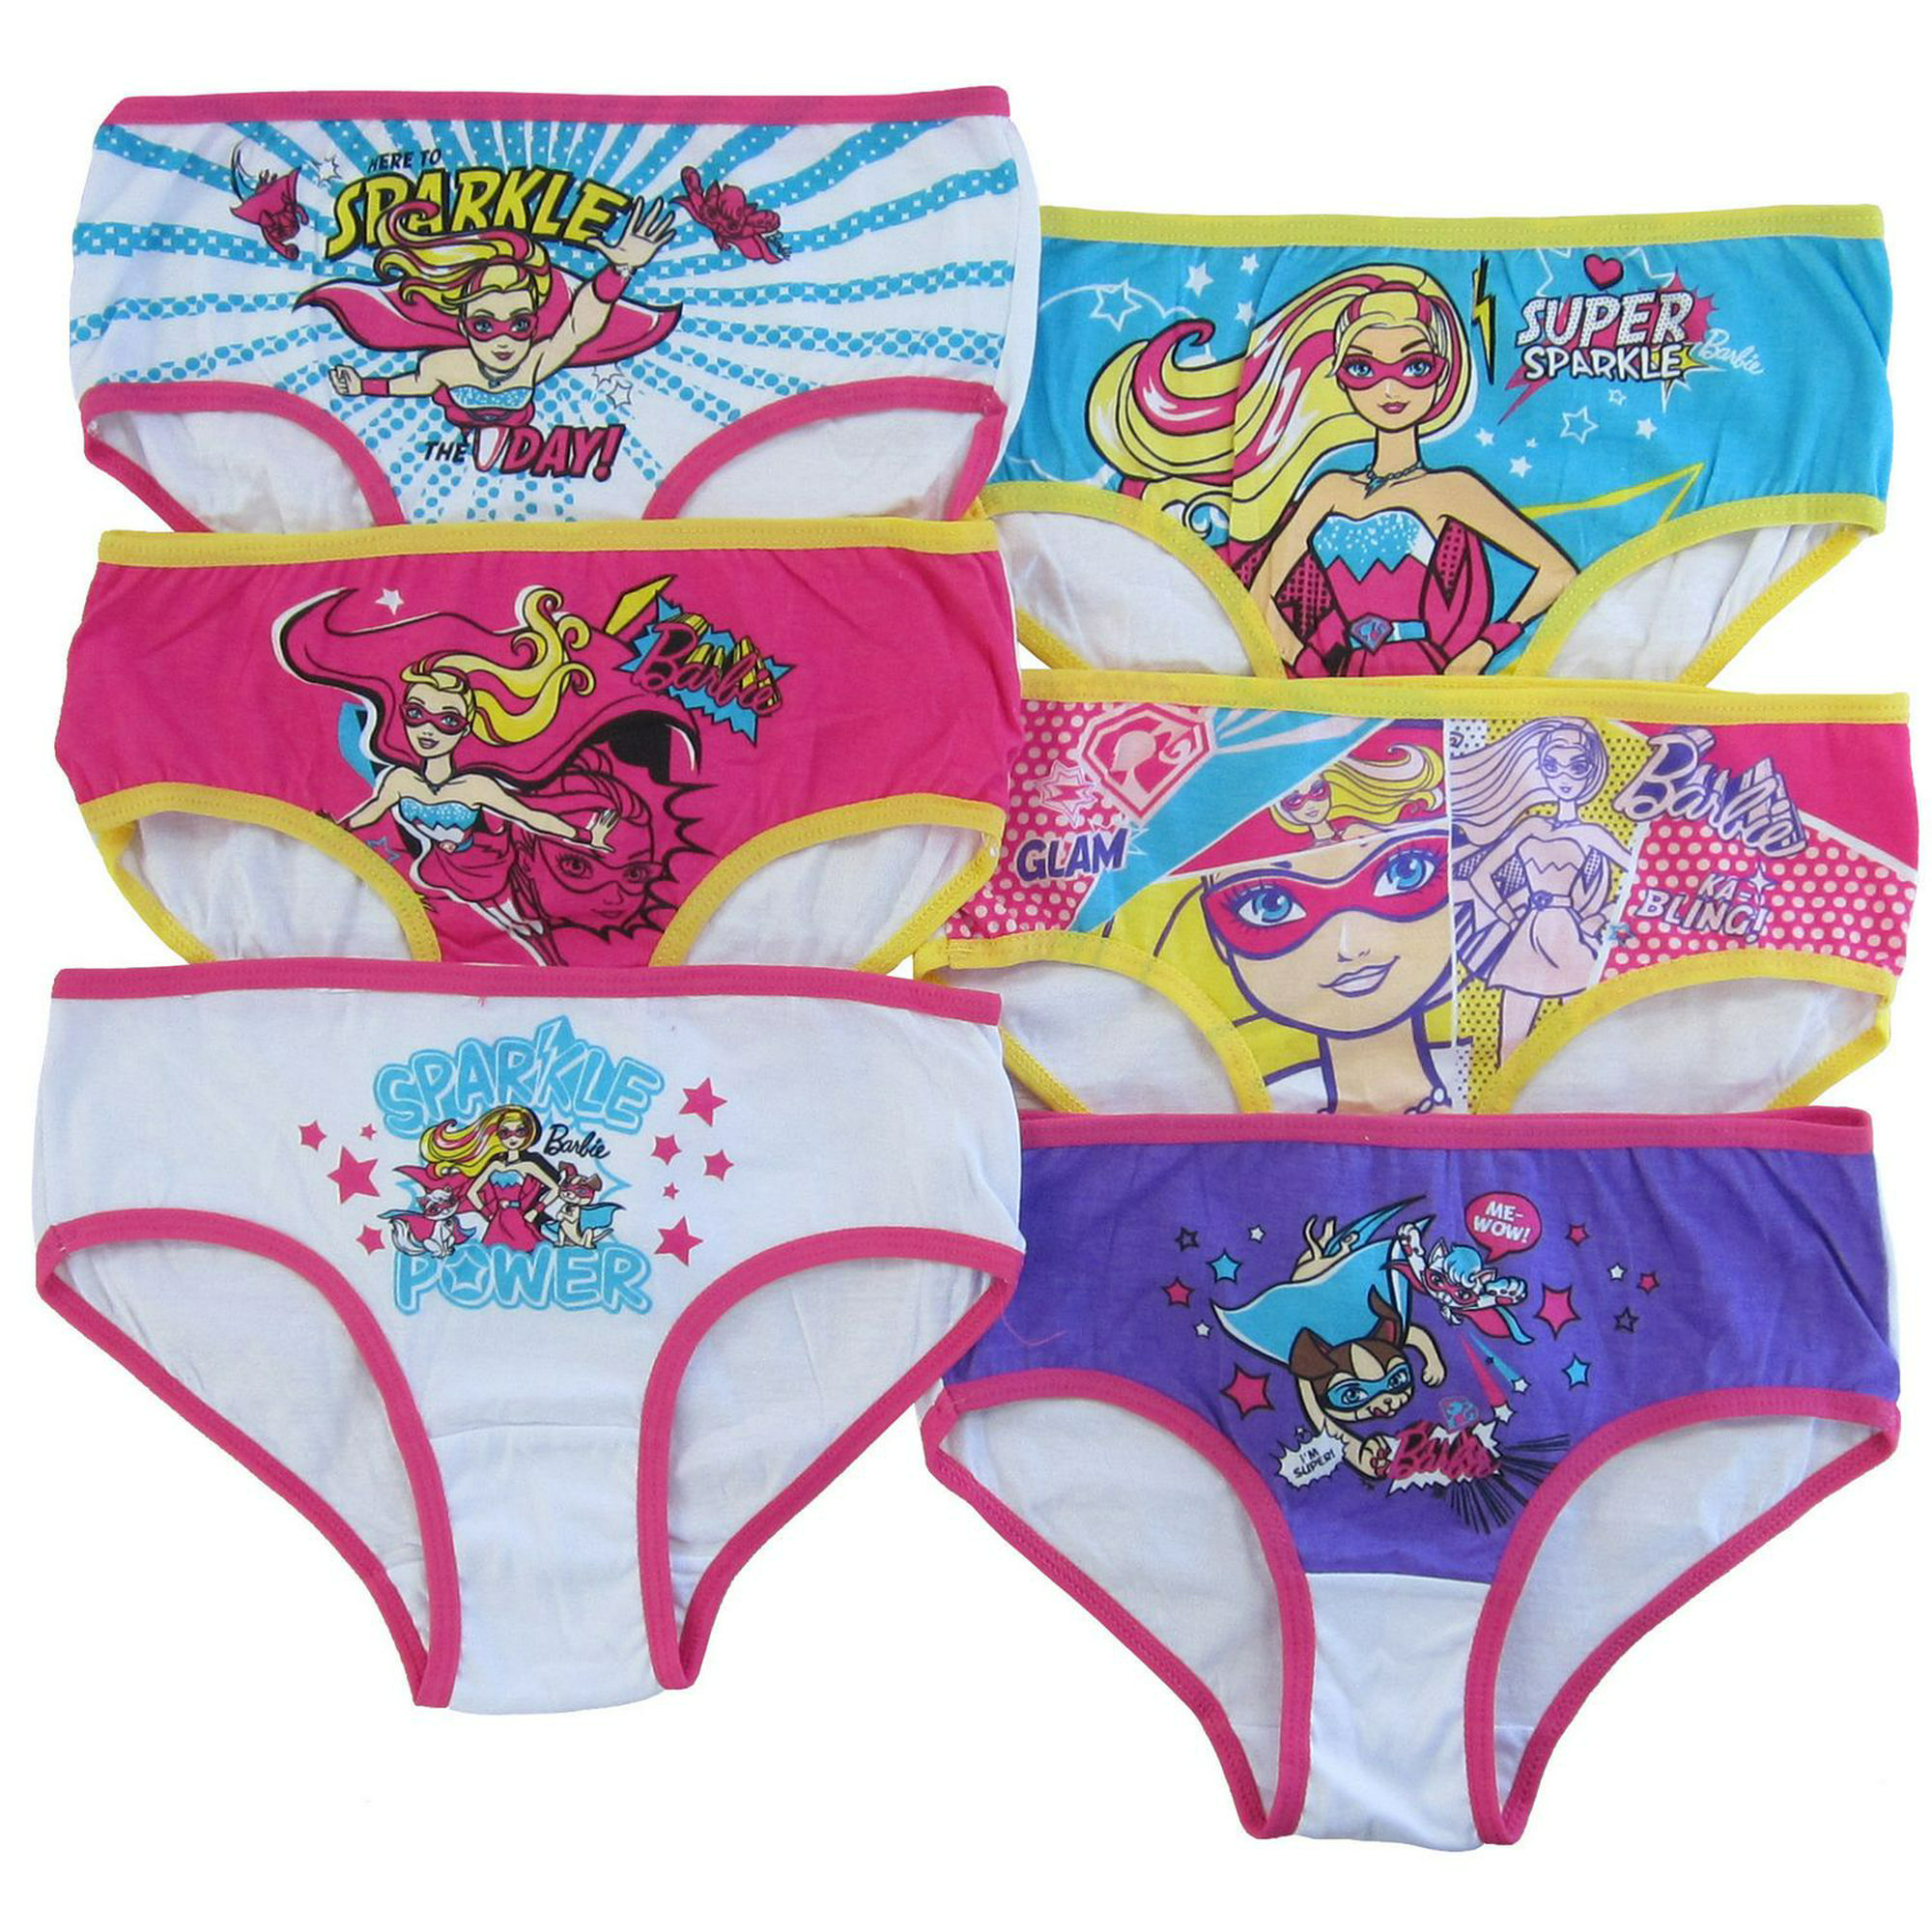 Buy Handcraft Little Girls' Barbie Underwear Set (Pack of 7), Multi, 8 at